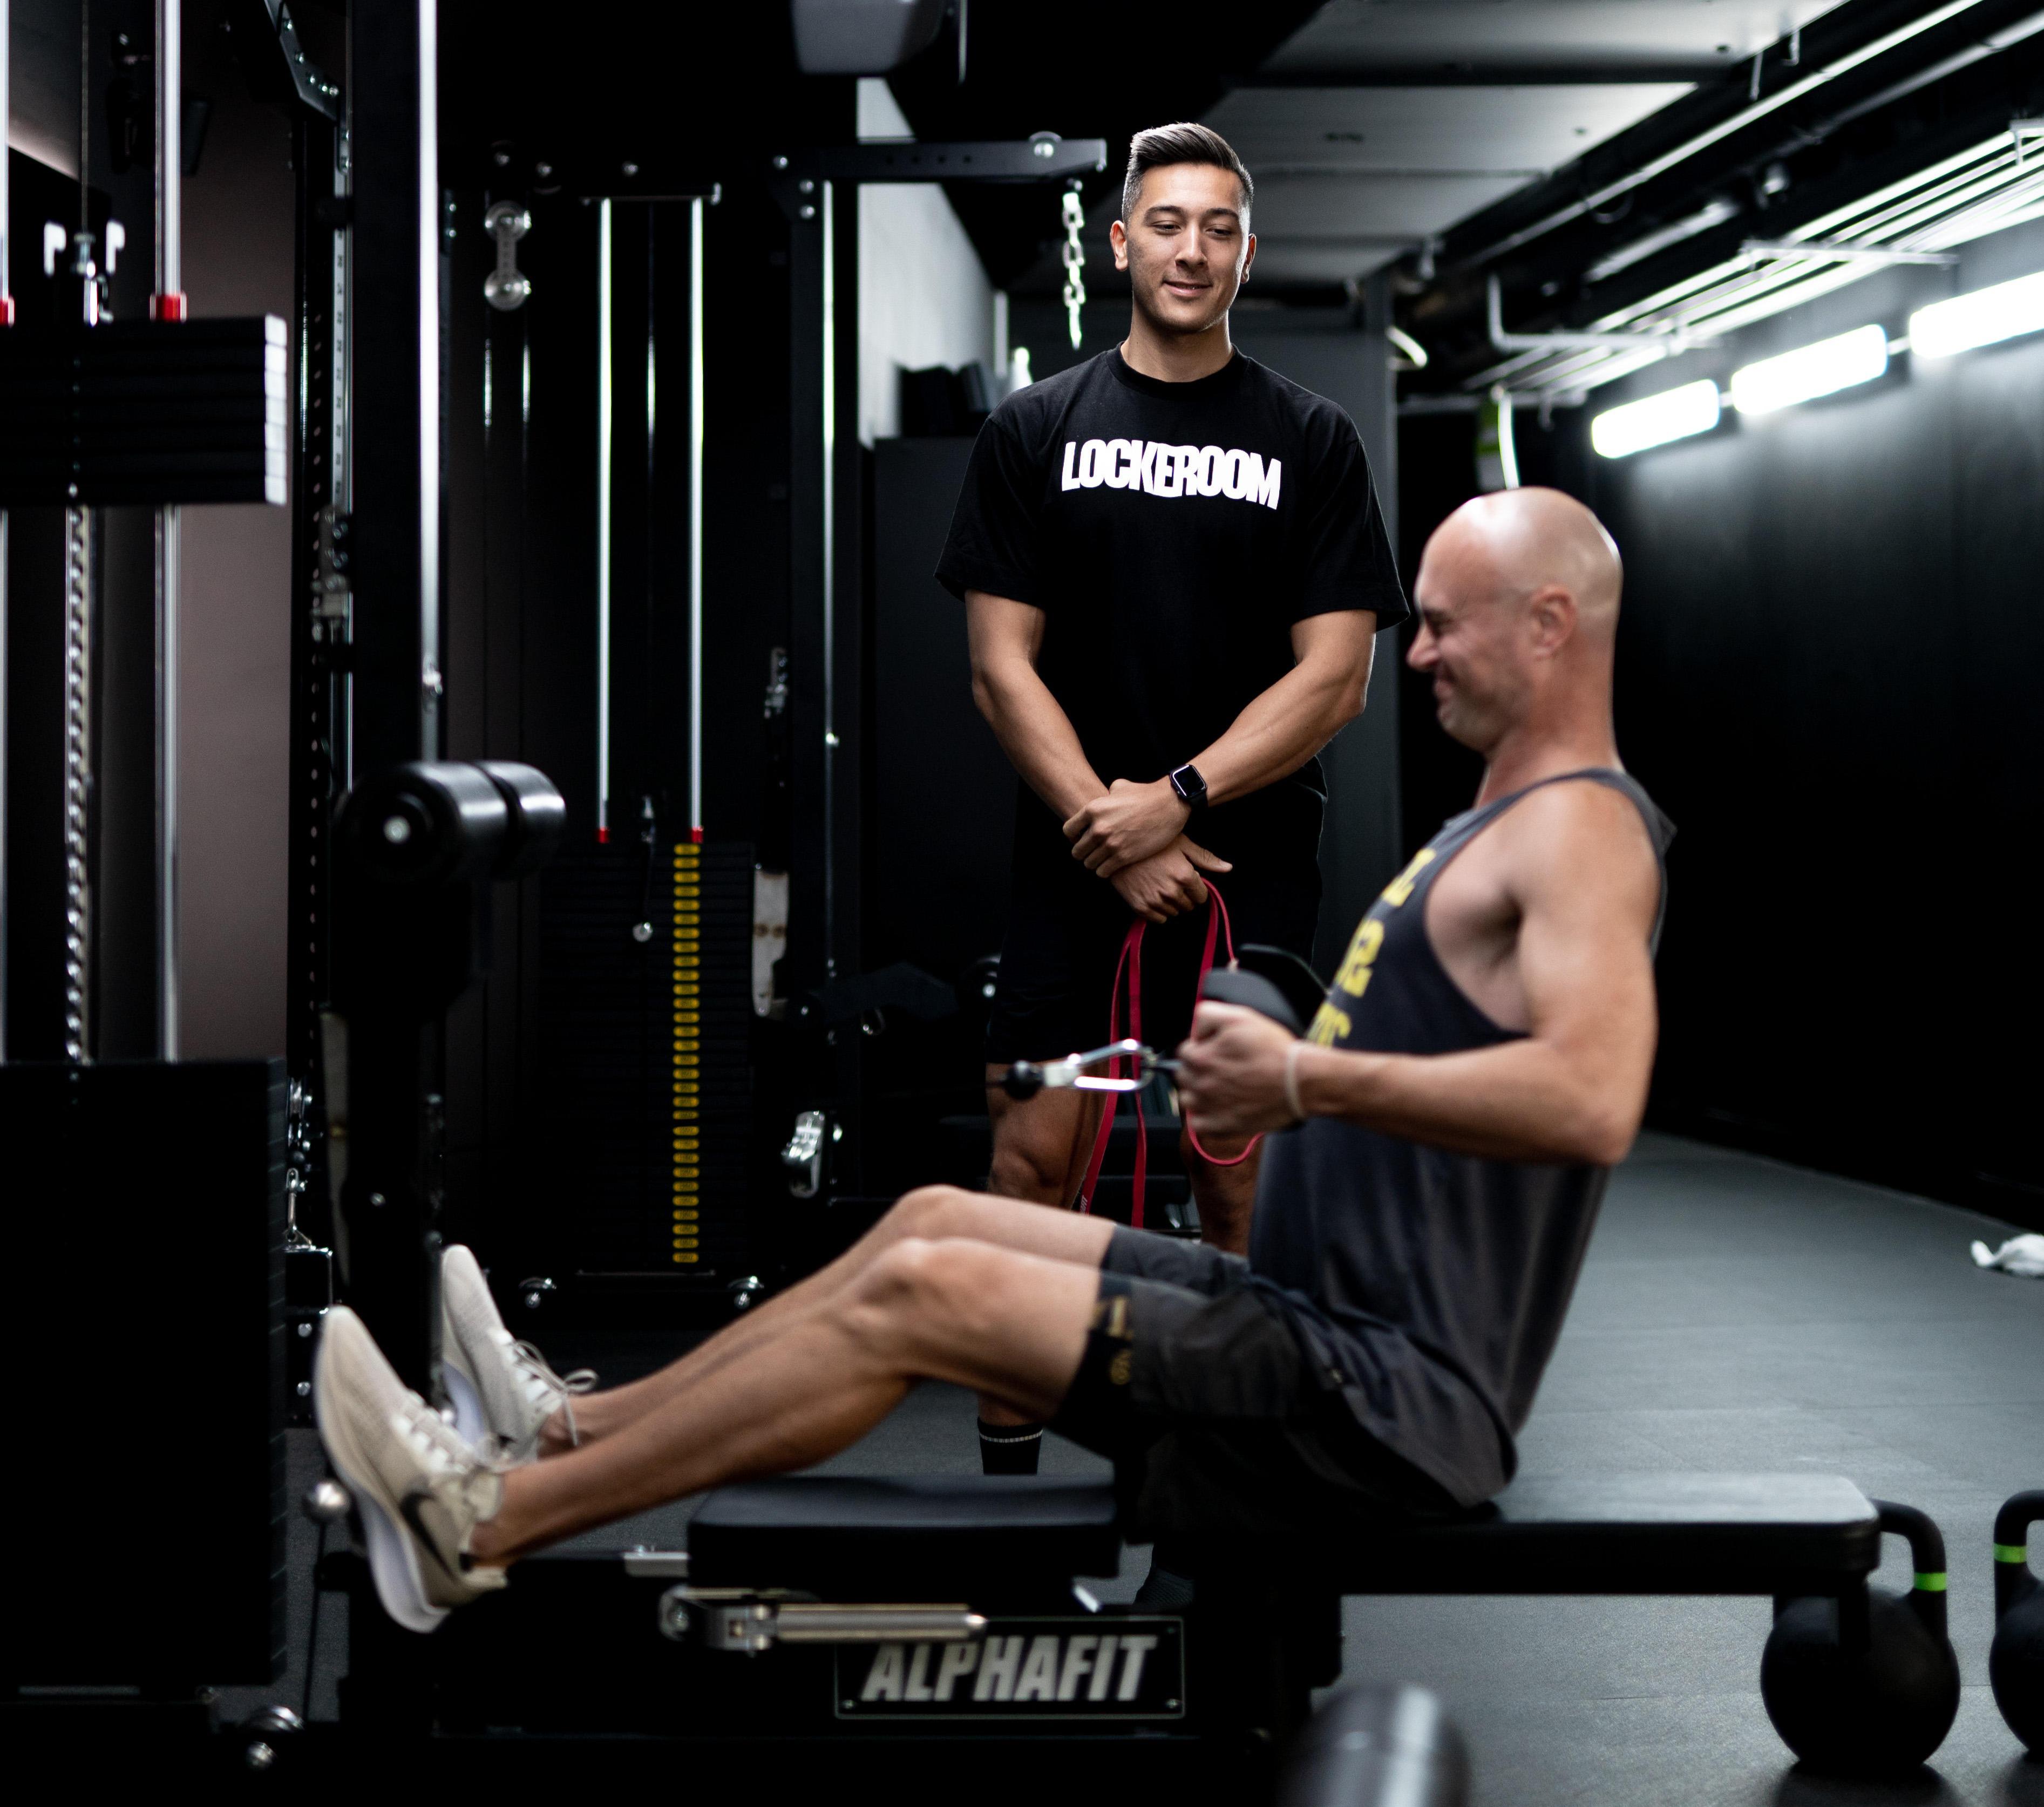 Private Personal Training Lockeroom Gym Personal Trainers Bridge Street Sydney 0482 074 373